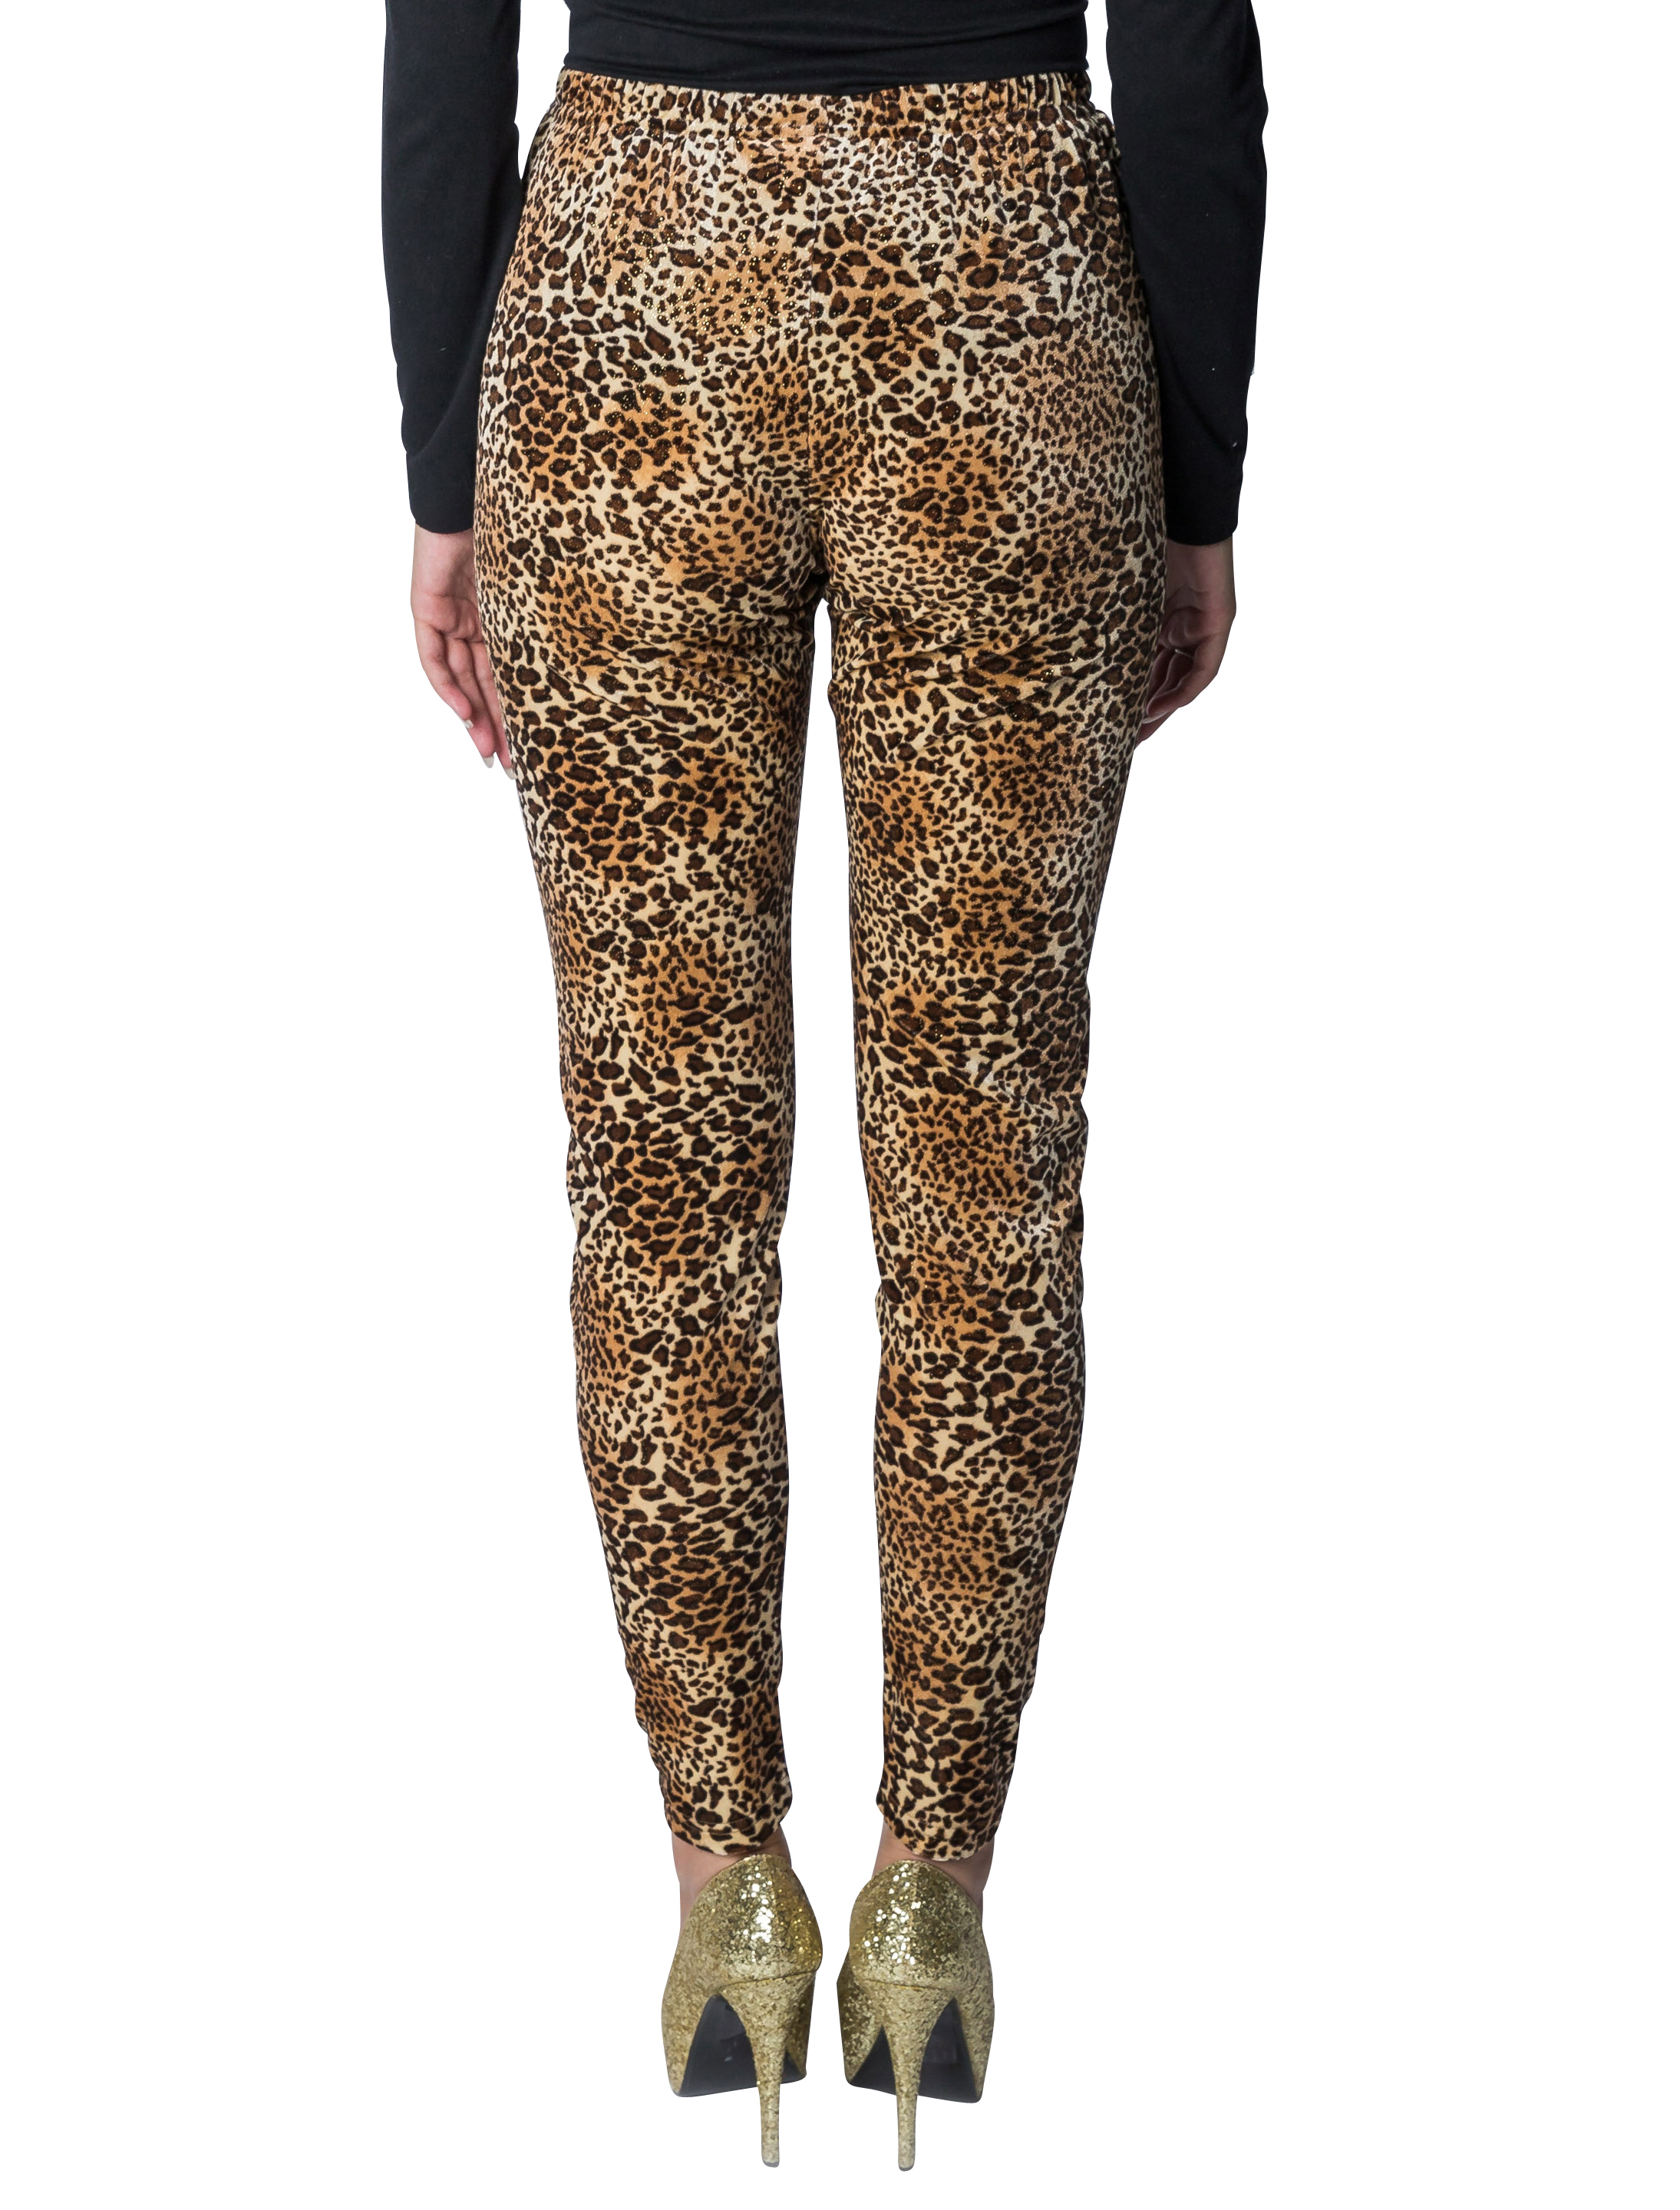 Leggings Leopard schwarz/braun L/XL